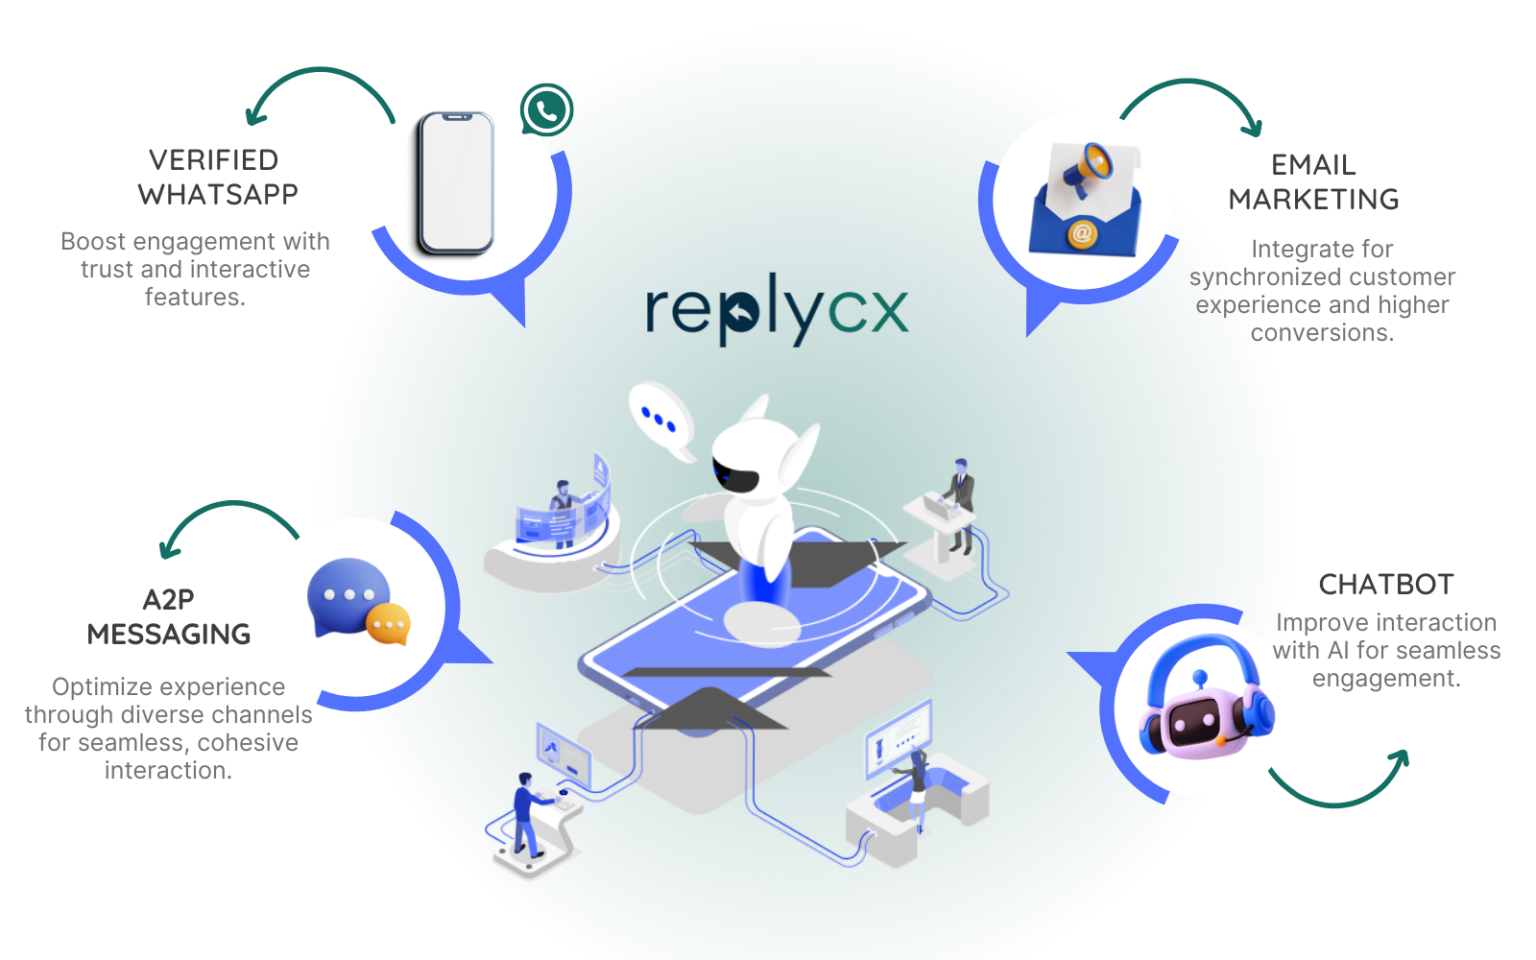 replycx cpaas platform